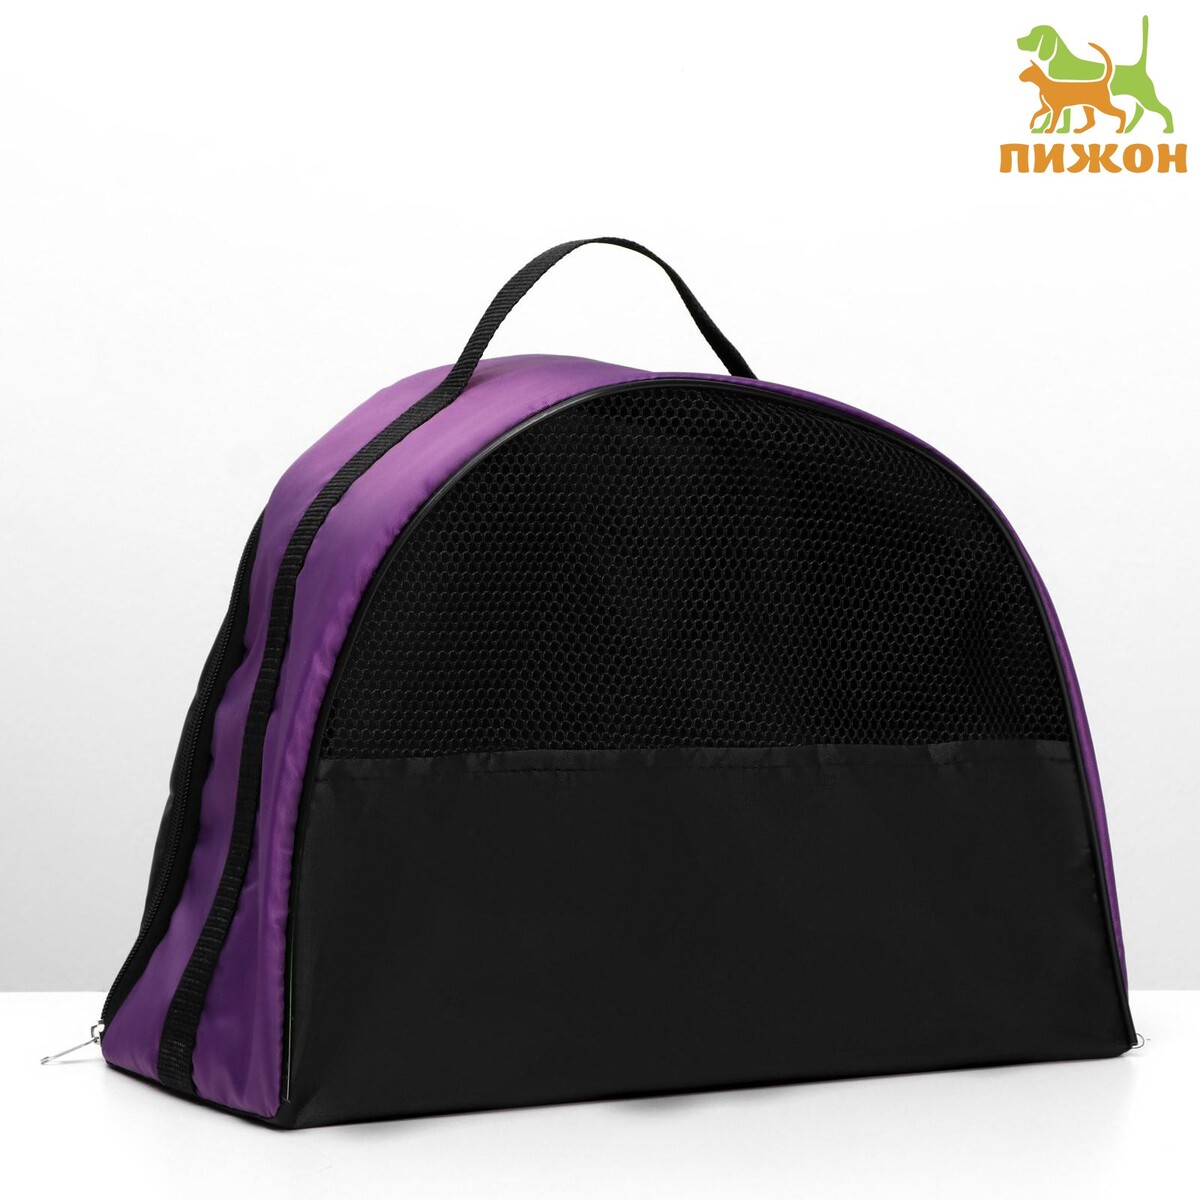 Сумка - переноска для животных, оксфорд, 39 х 19 х 27 см, фиолетовая сумка переноска для животных оксфорд 36 х 17 х 25 см коричневая